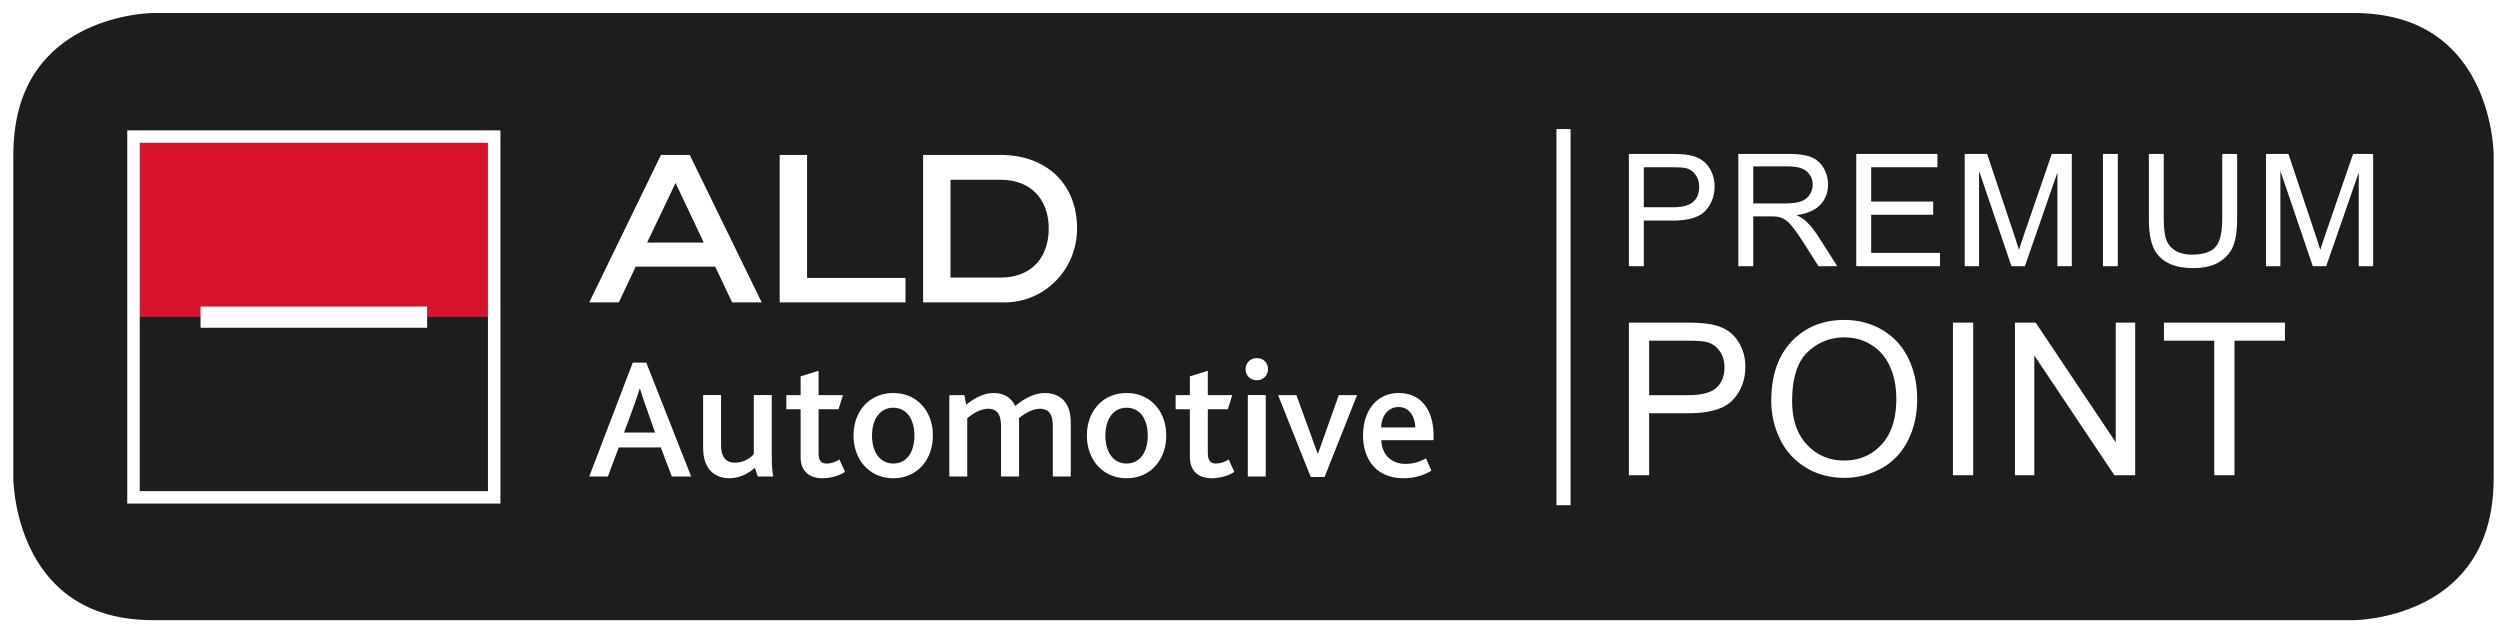 Sintesi Automotive è Premium Point ALD Automotive operativo a Milano e Monza